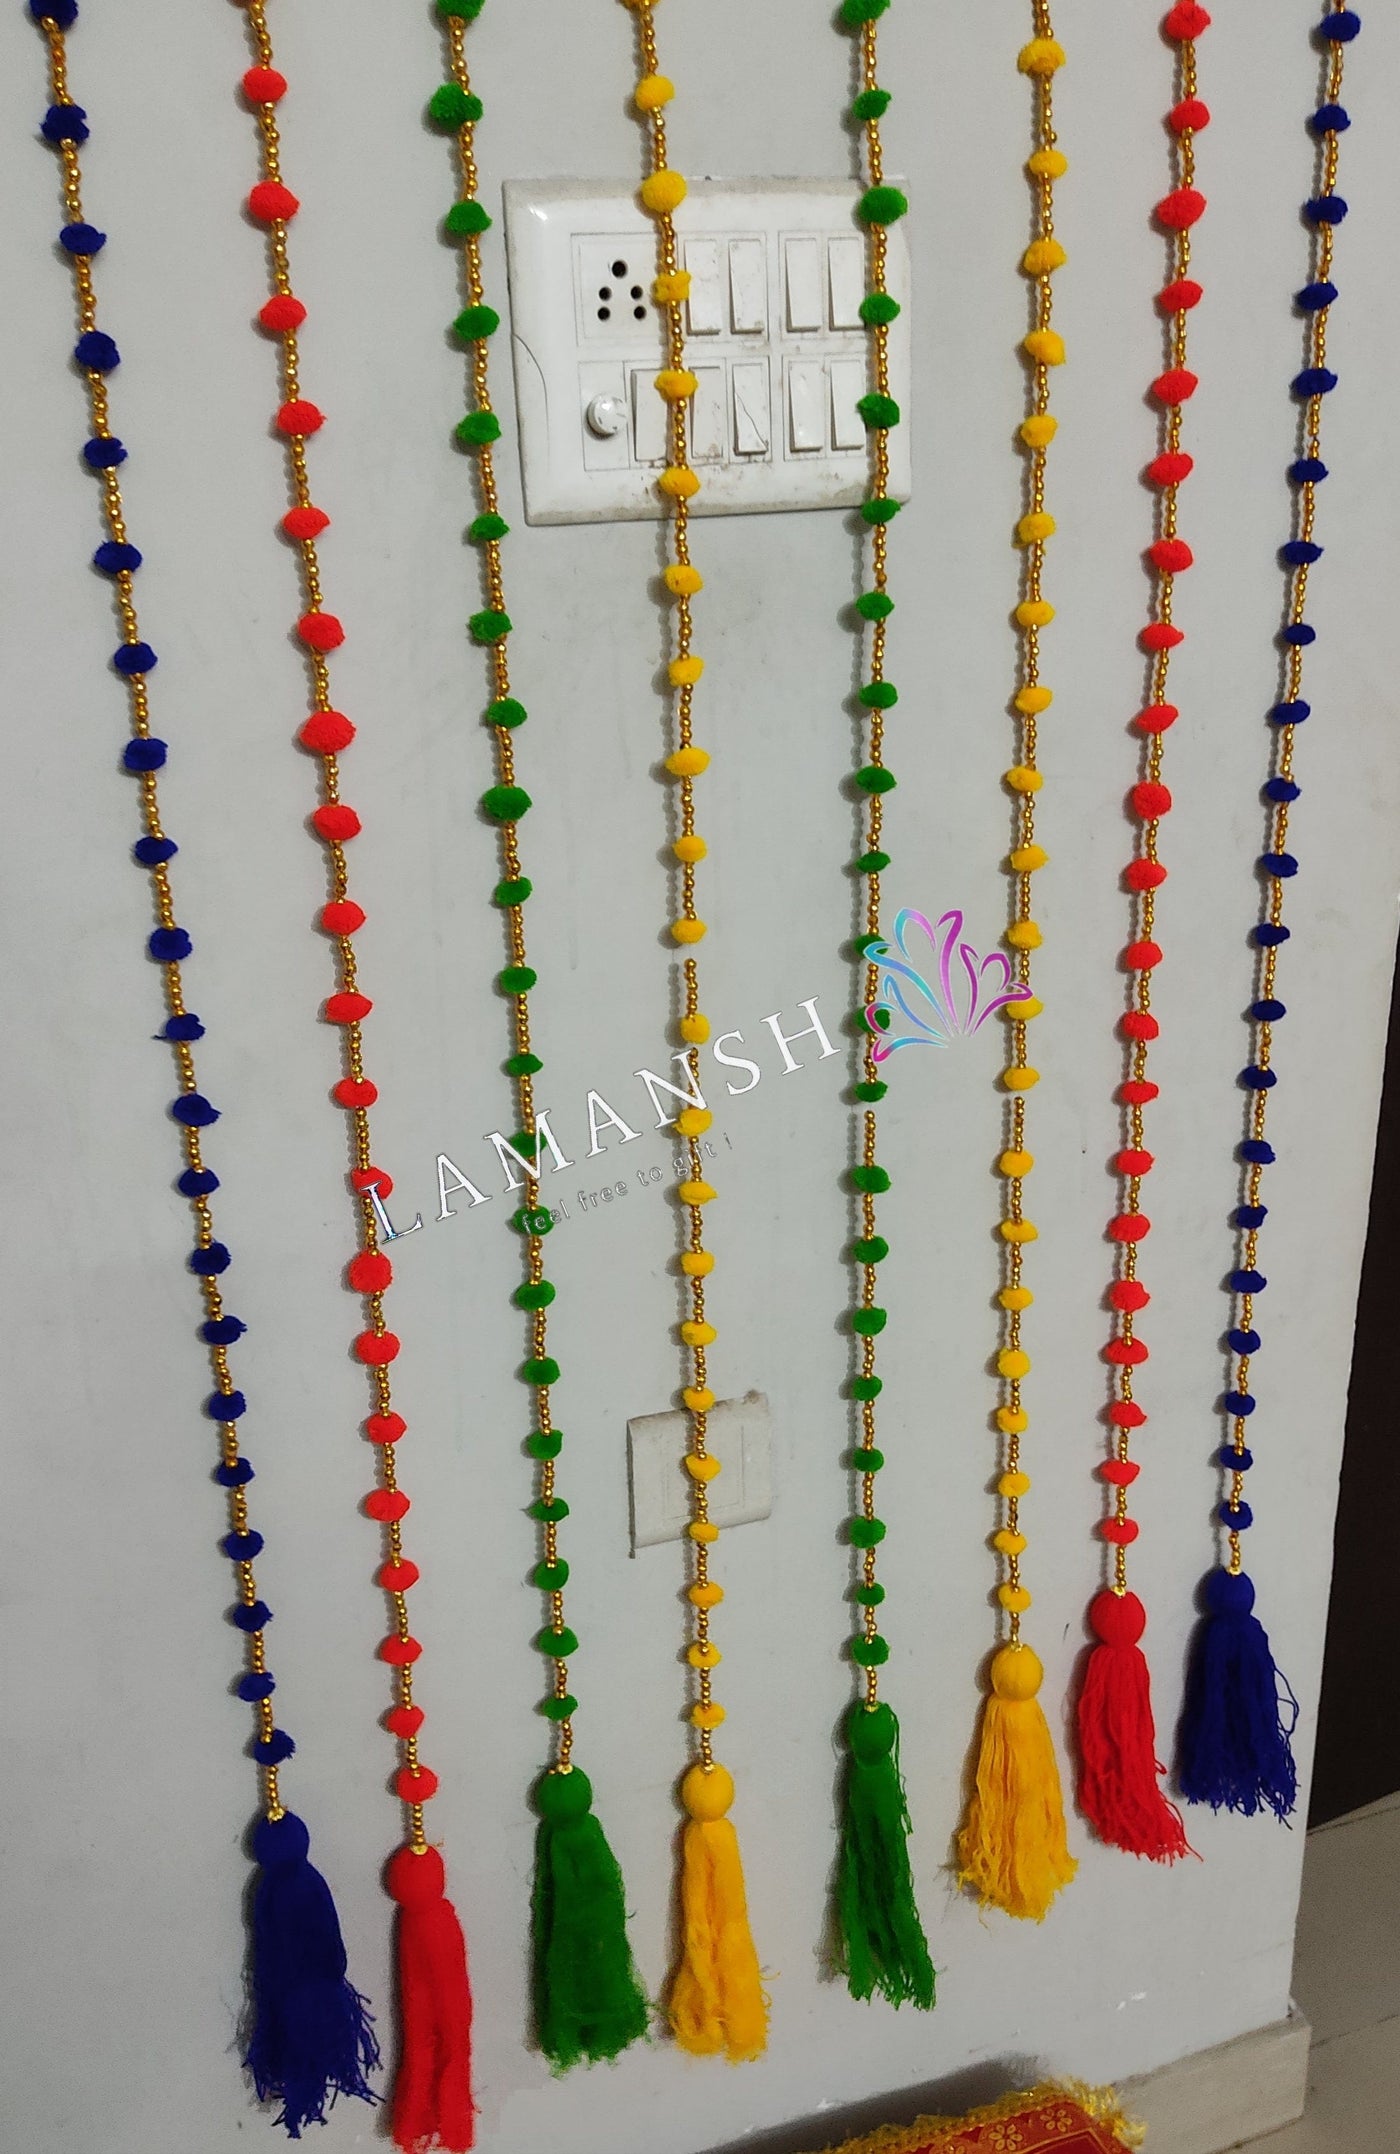 LAMANSH Decorative hanging LAMANSH® Pack of 20 (5 feet) Pom Pom X Tassels Hanging Line Latkans for Home Decor Front Door Diwali Wedding / Pom Poms Beads hangings with woolen tassels